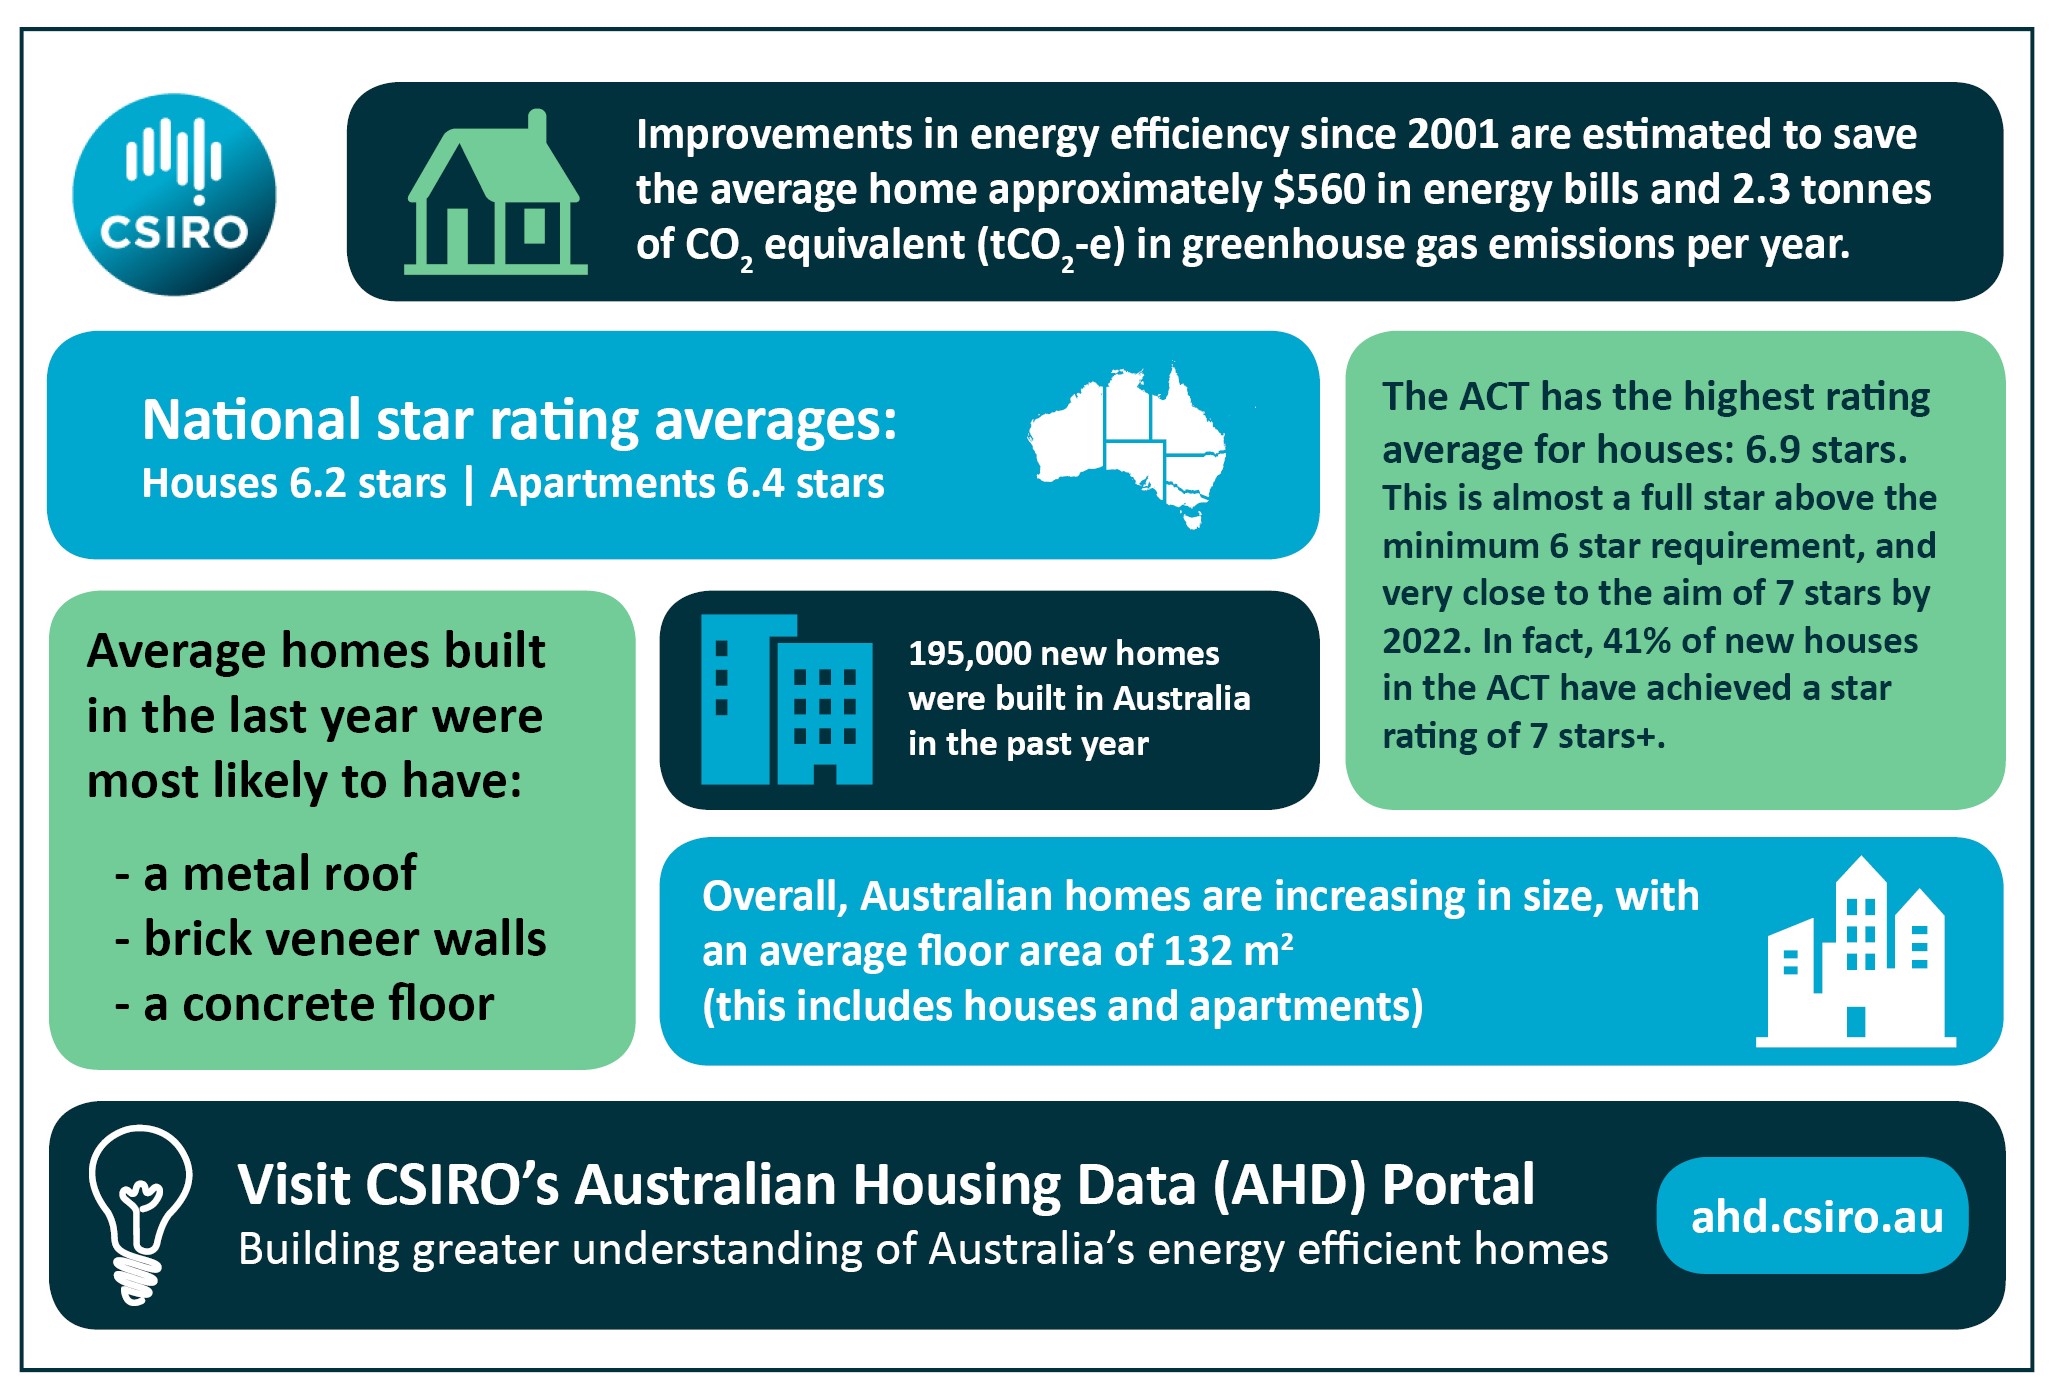 new data portal from Australia's national science agency - Australian Housing Data